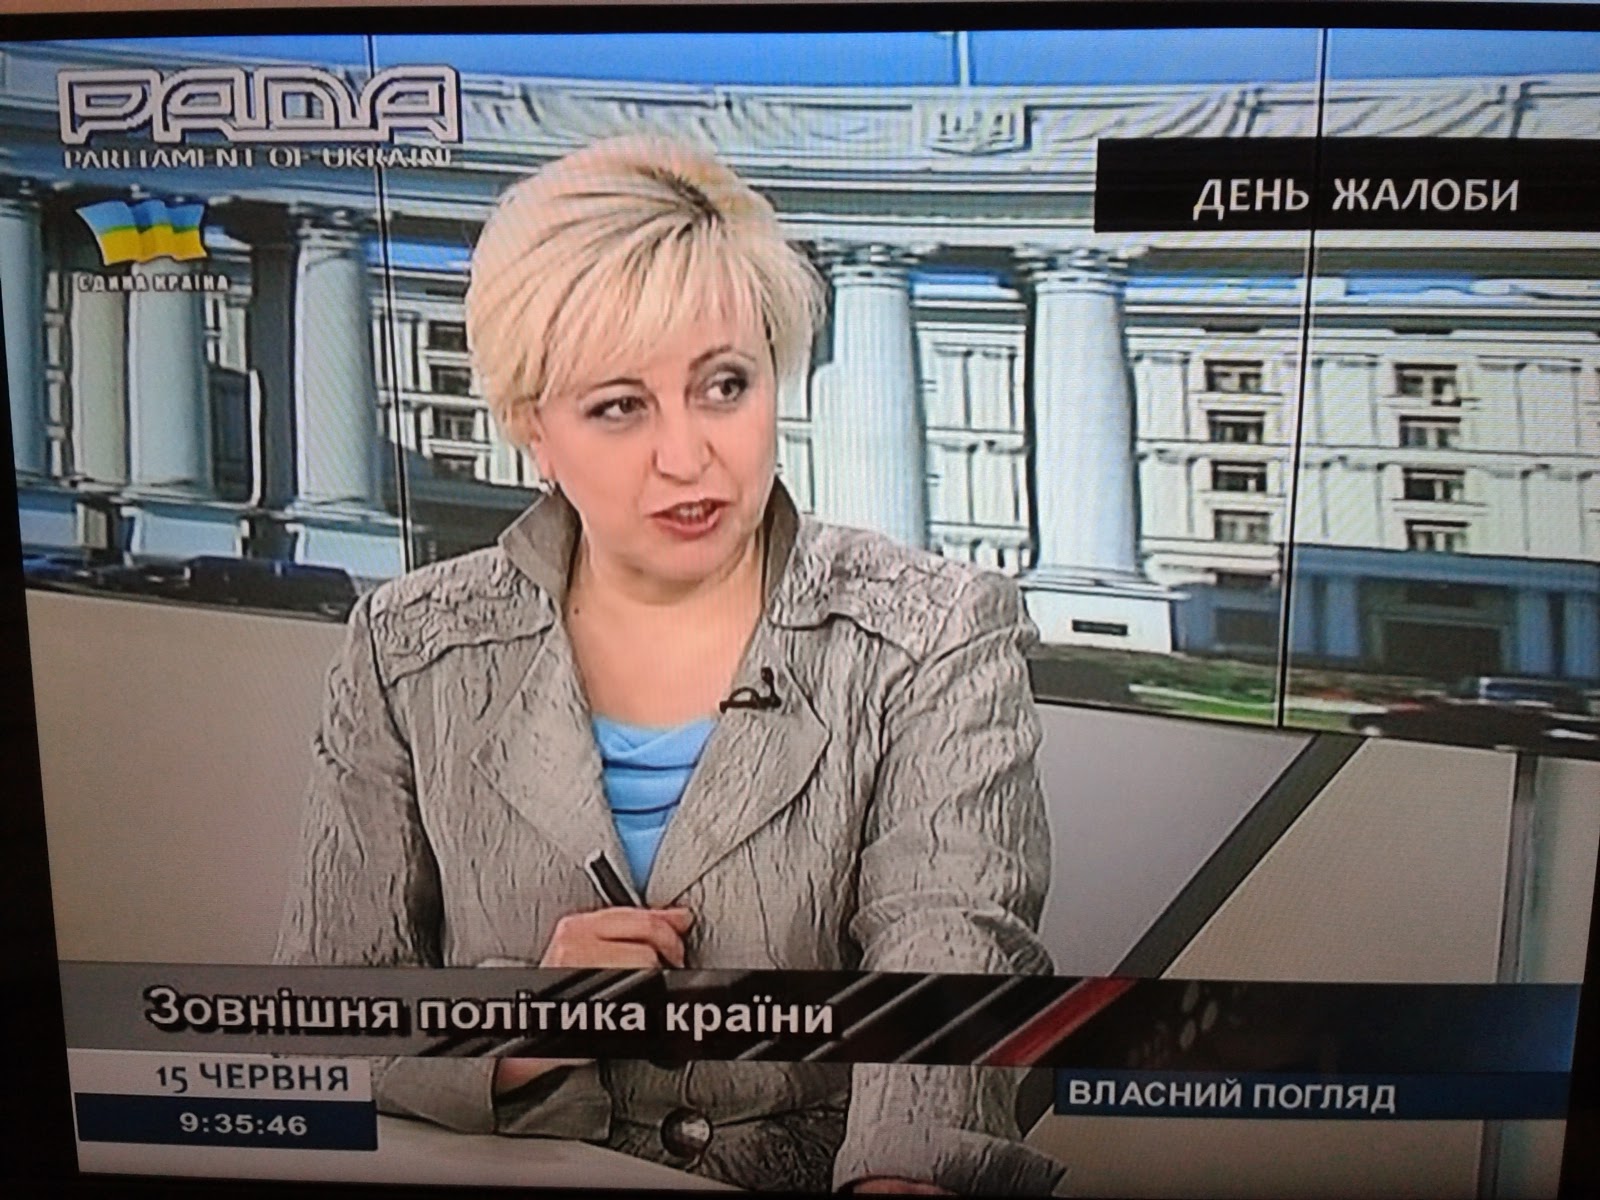 Тг канал рада. Телеканал рада Украина. Телеканал рада логотип. Телеканал рада ведущие. Новости телеканала рада.